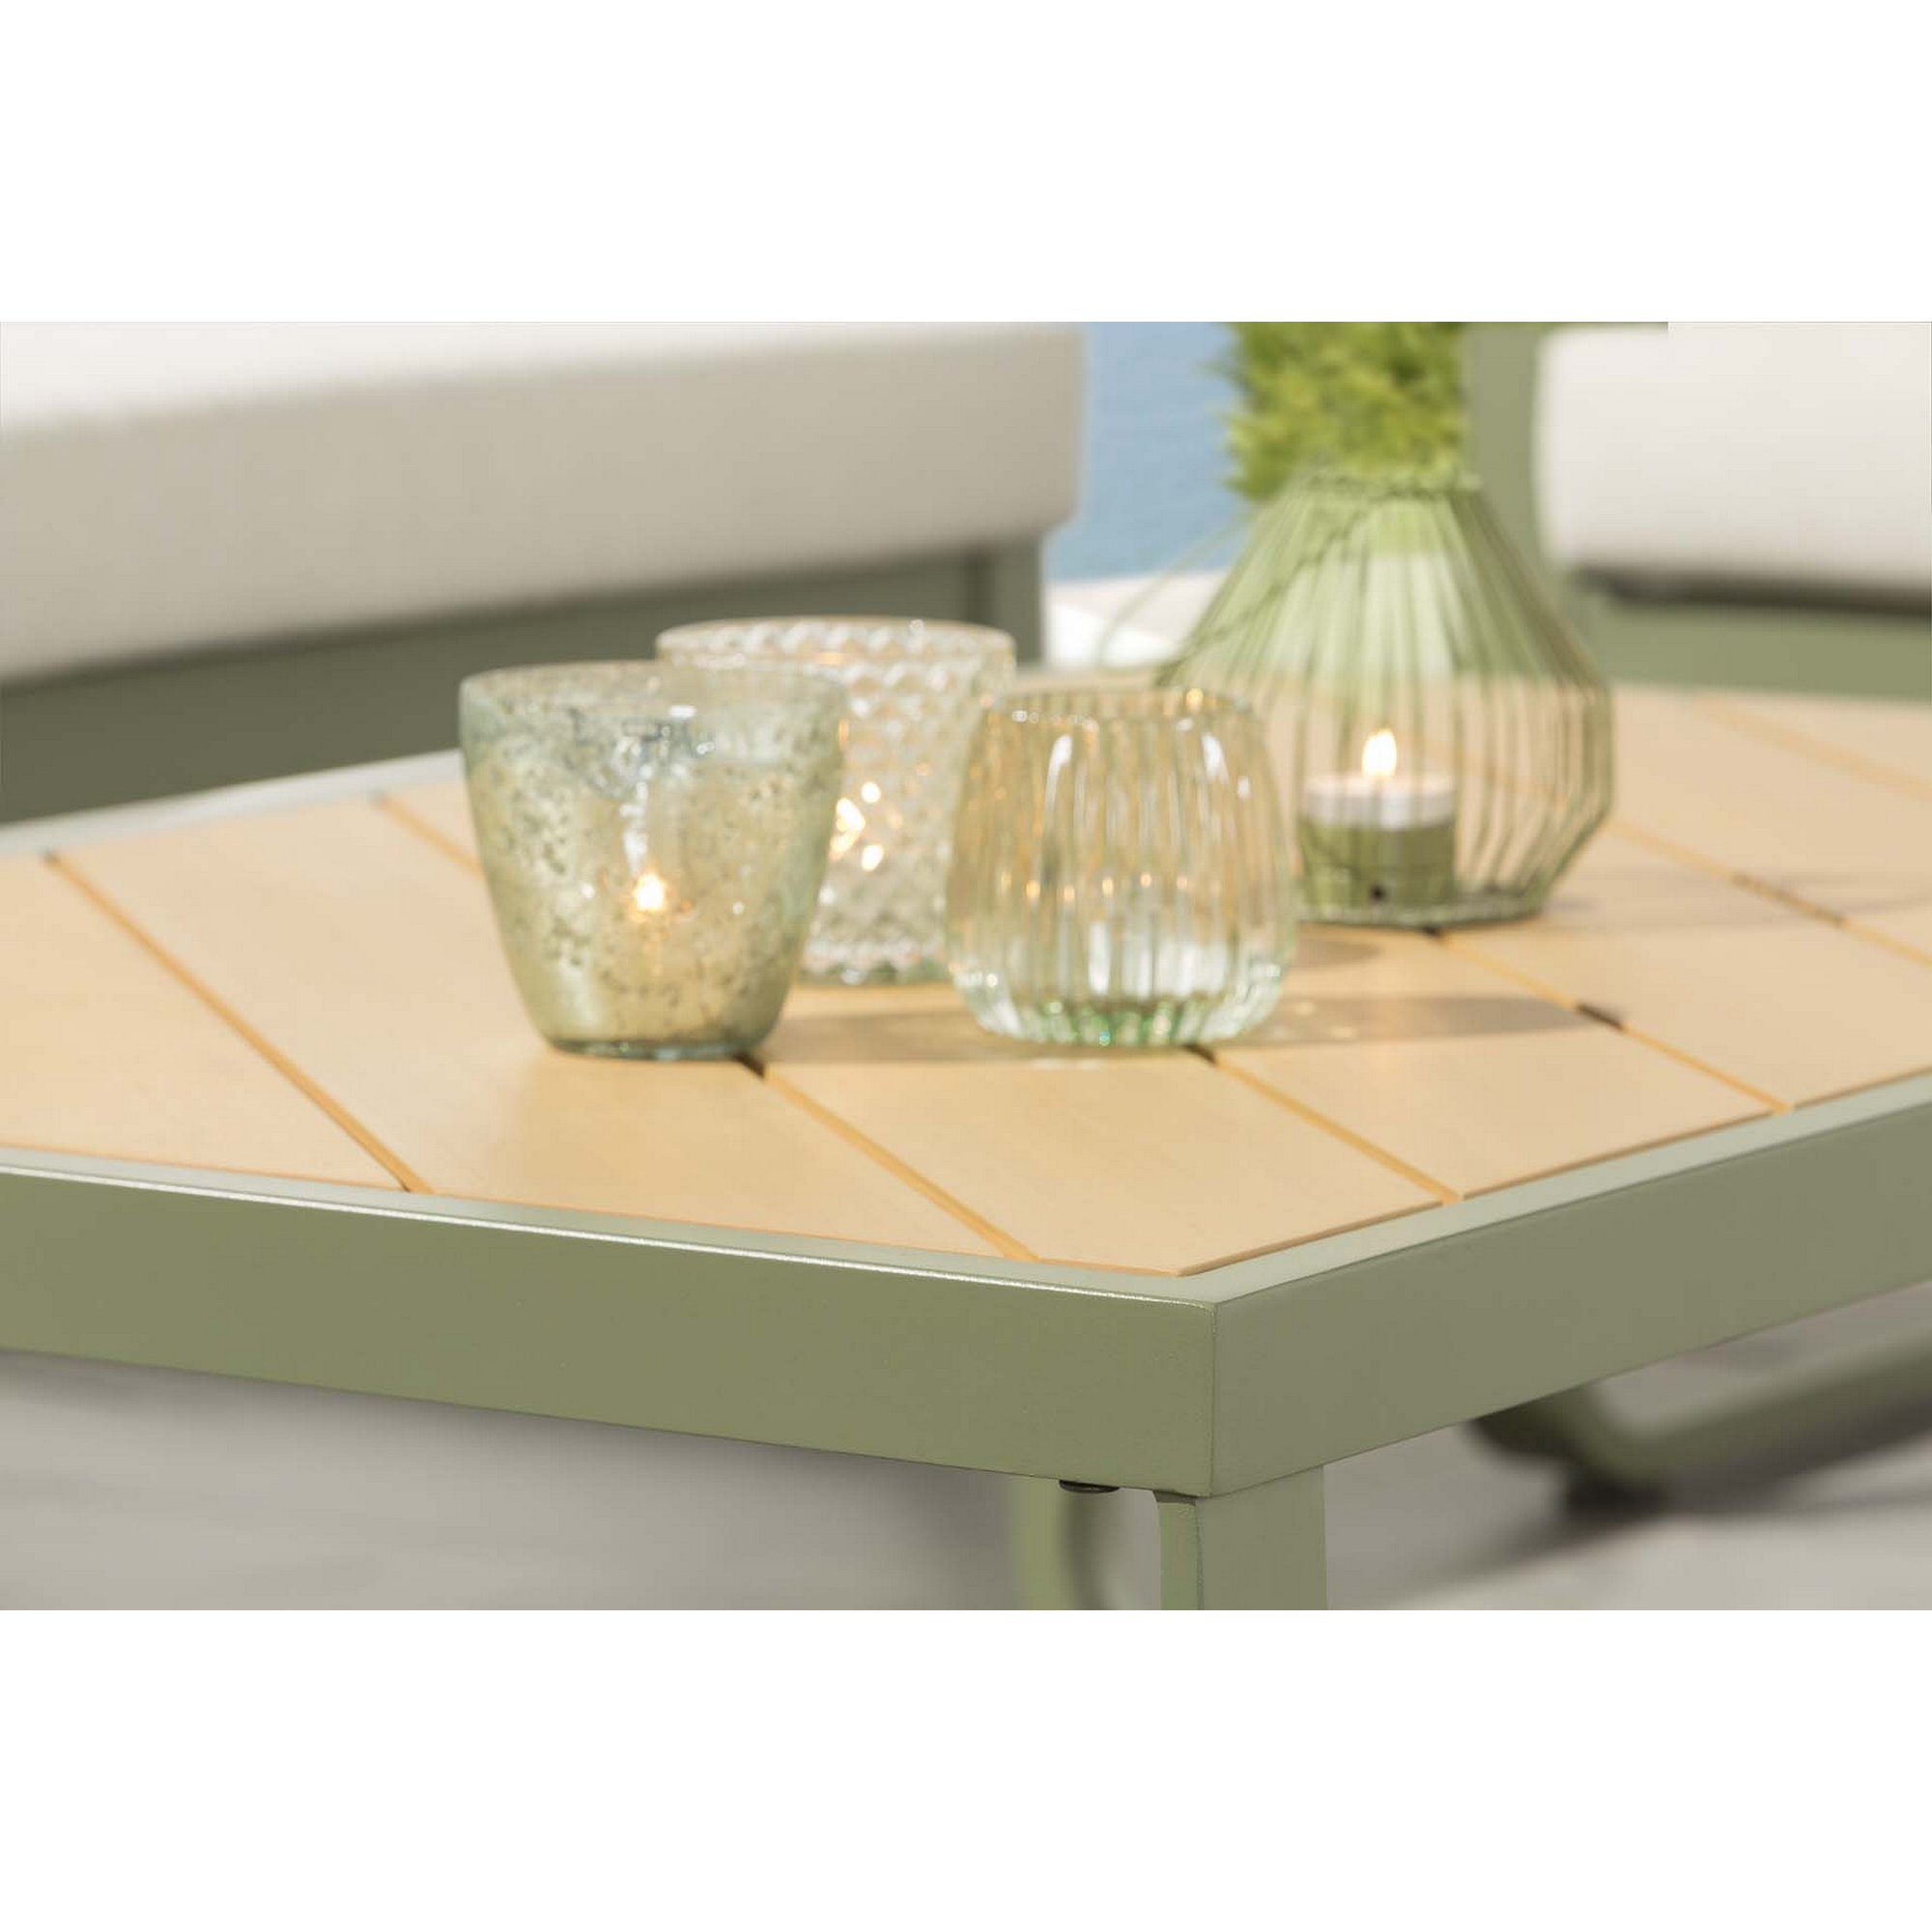 Loungemöbel-Set 'Martha' beige/grün 4-teilig + product picture